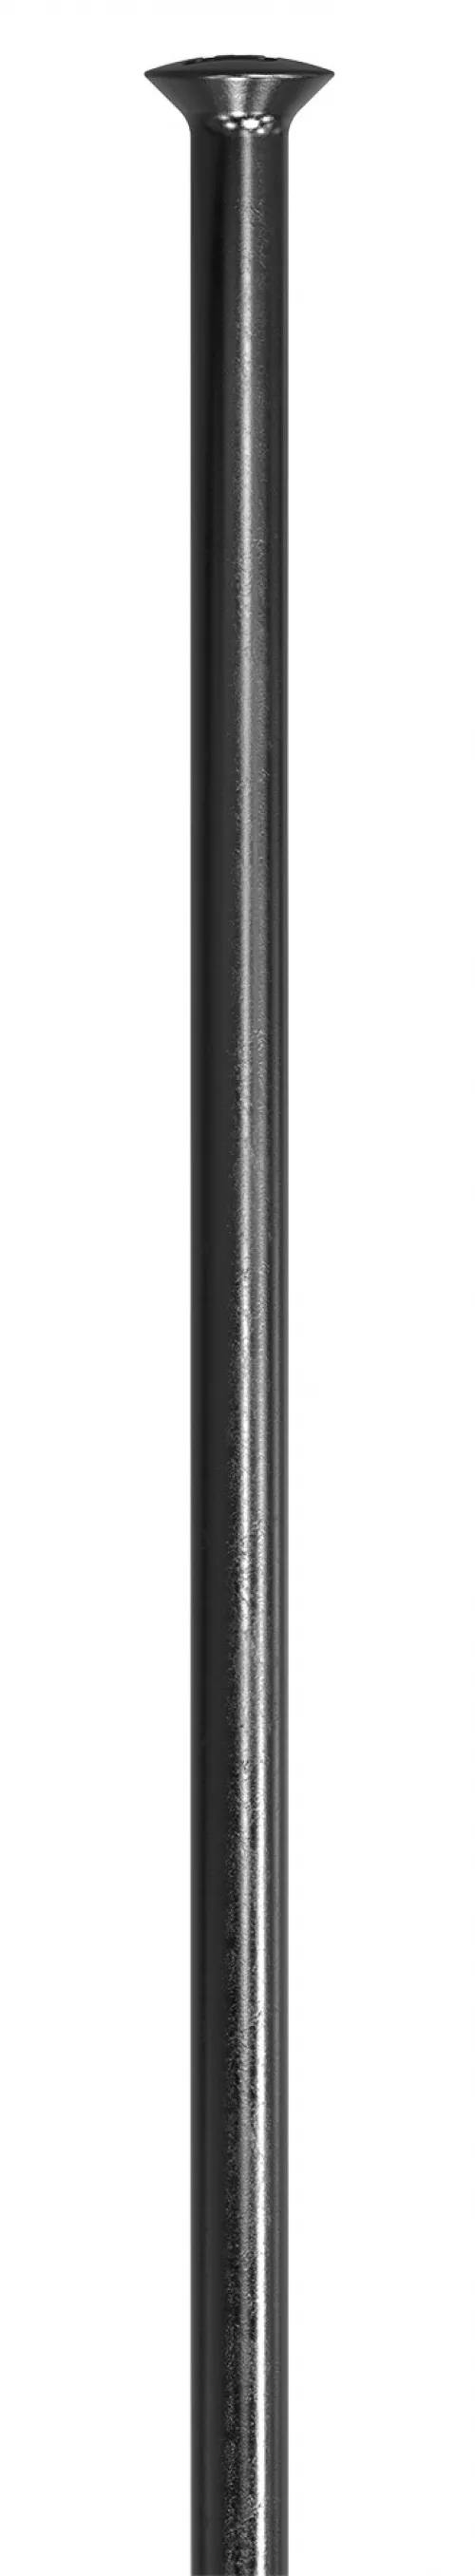 Спицы DT Swiss Сhampion (Straightpull) 2.0mm x 280mm black 100шт